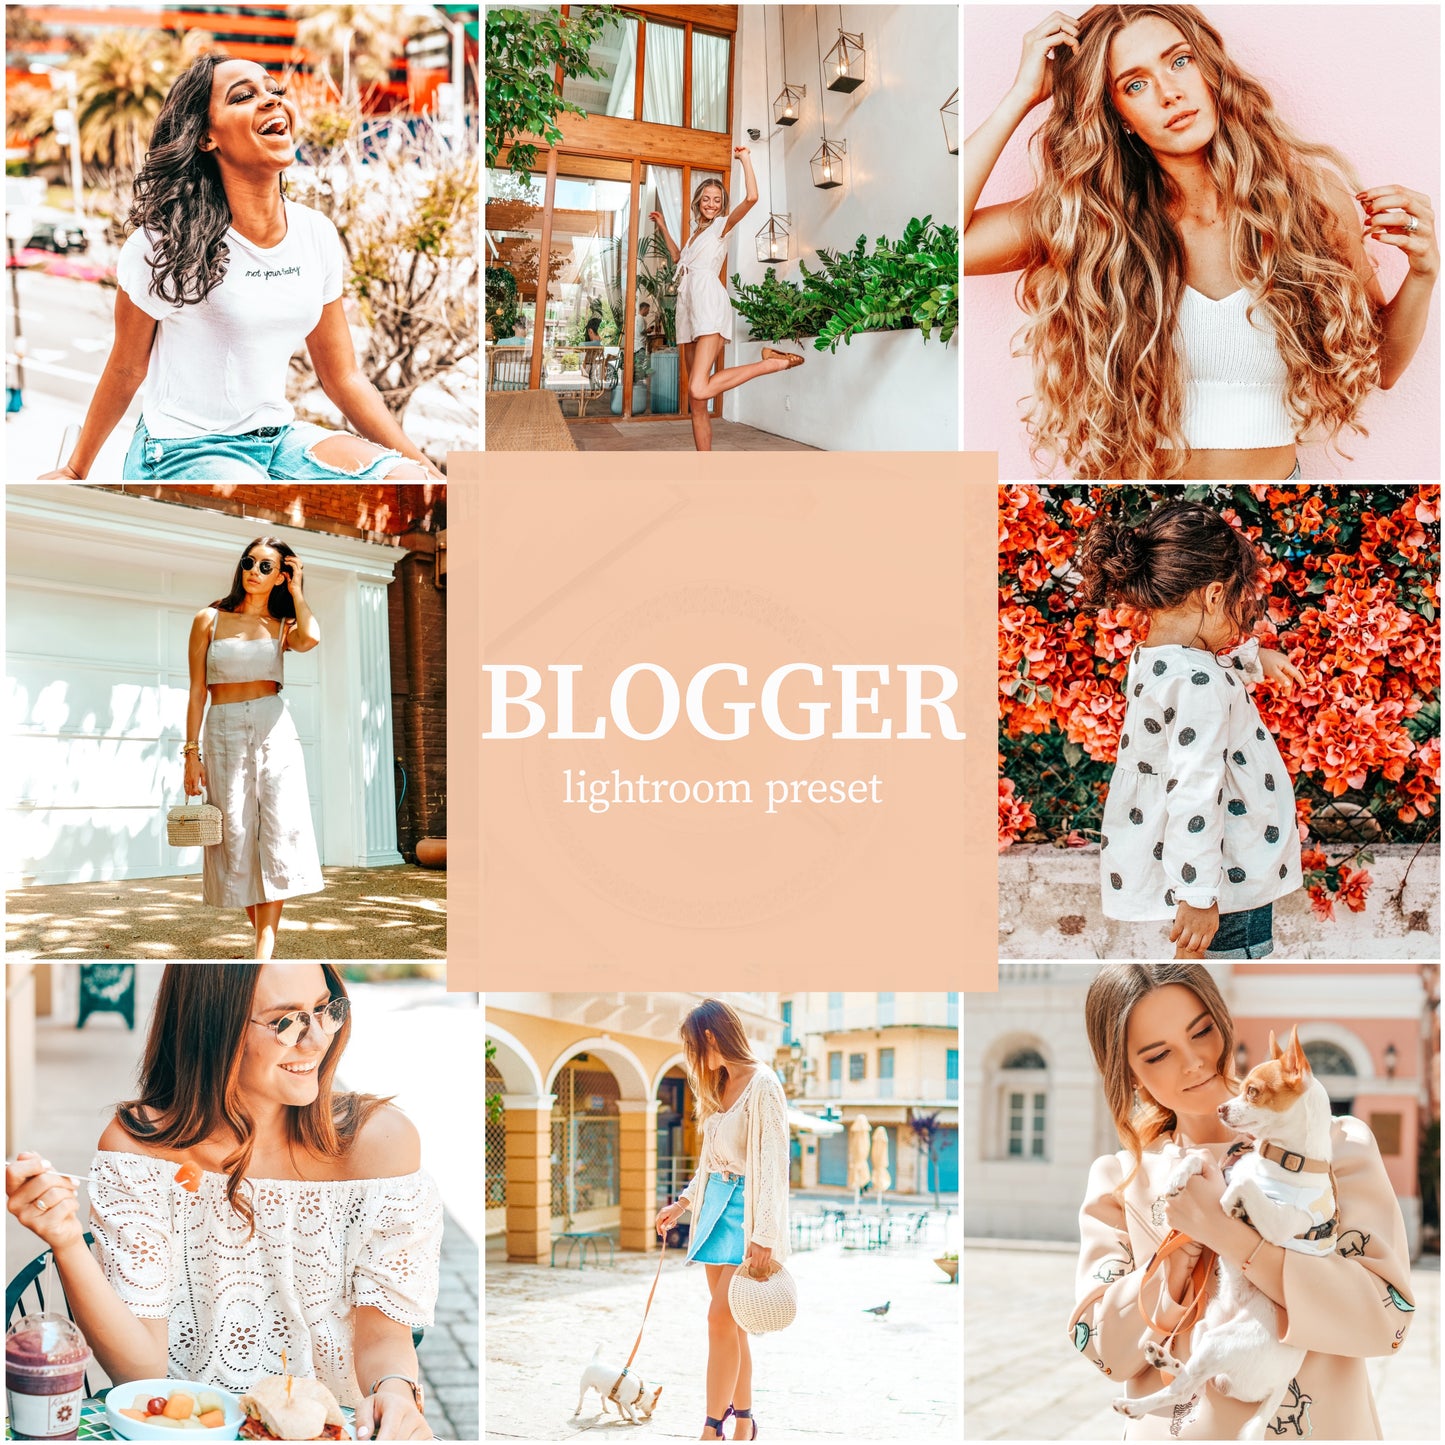 Blogger - Alicephotostudio